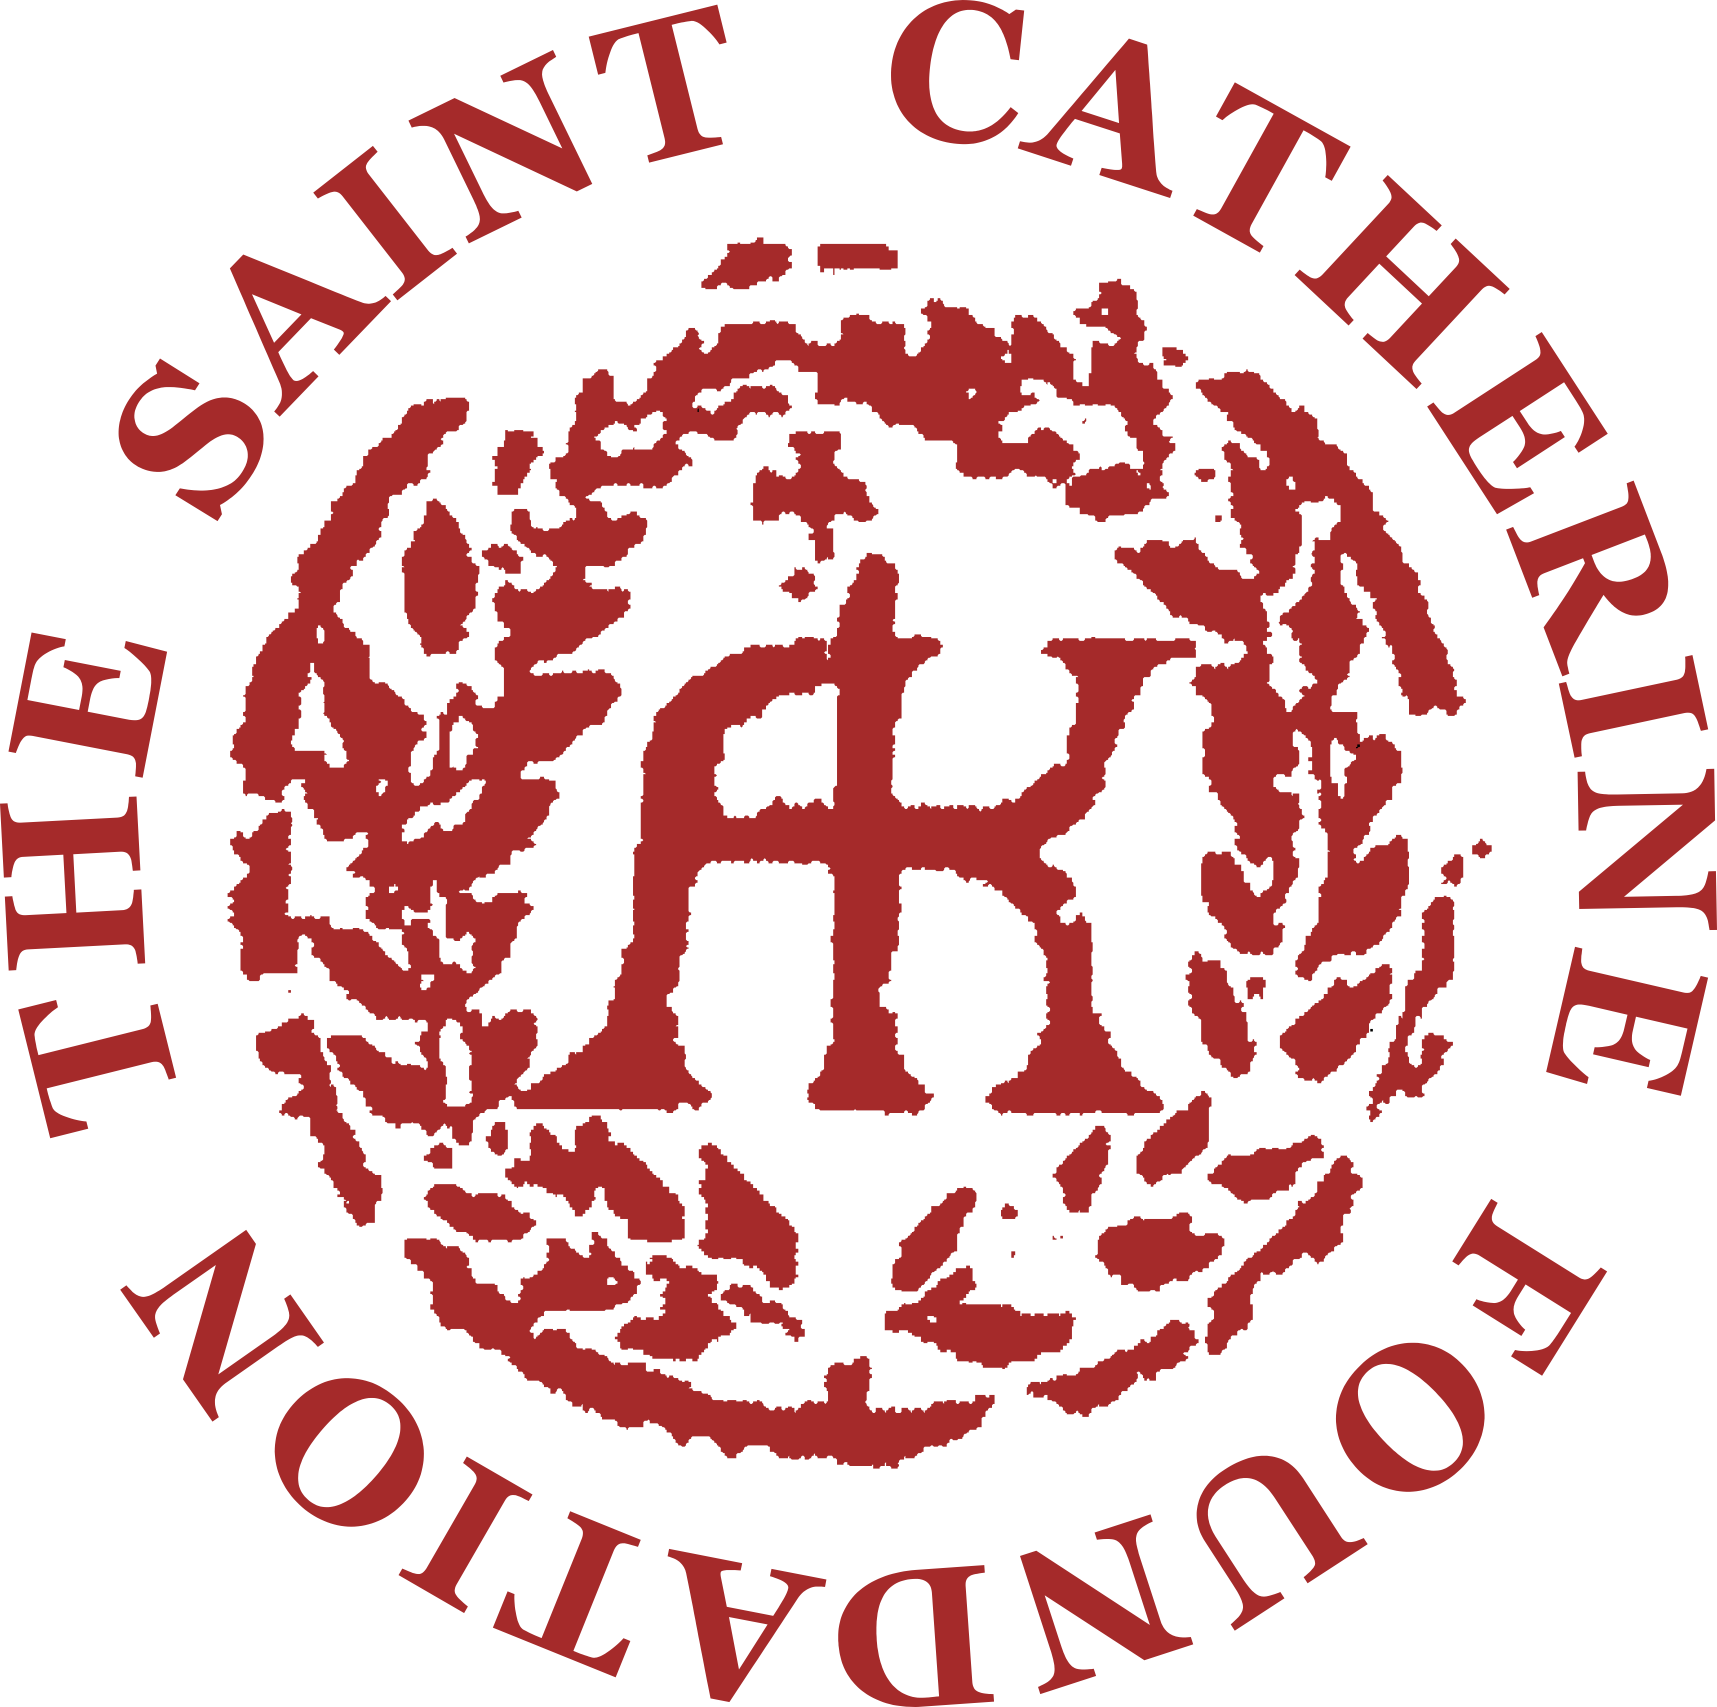 The Saint Catherine Foundation logo